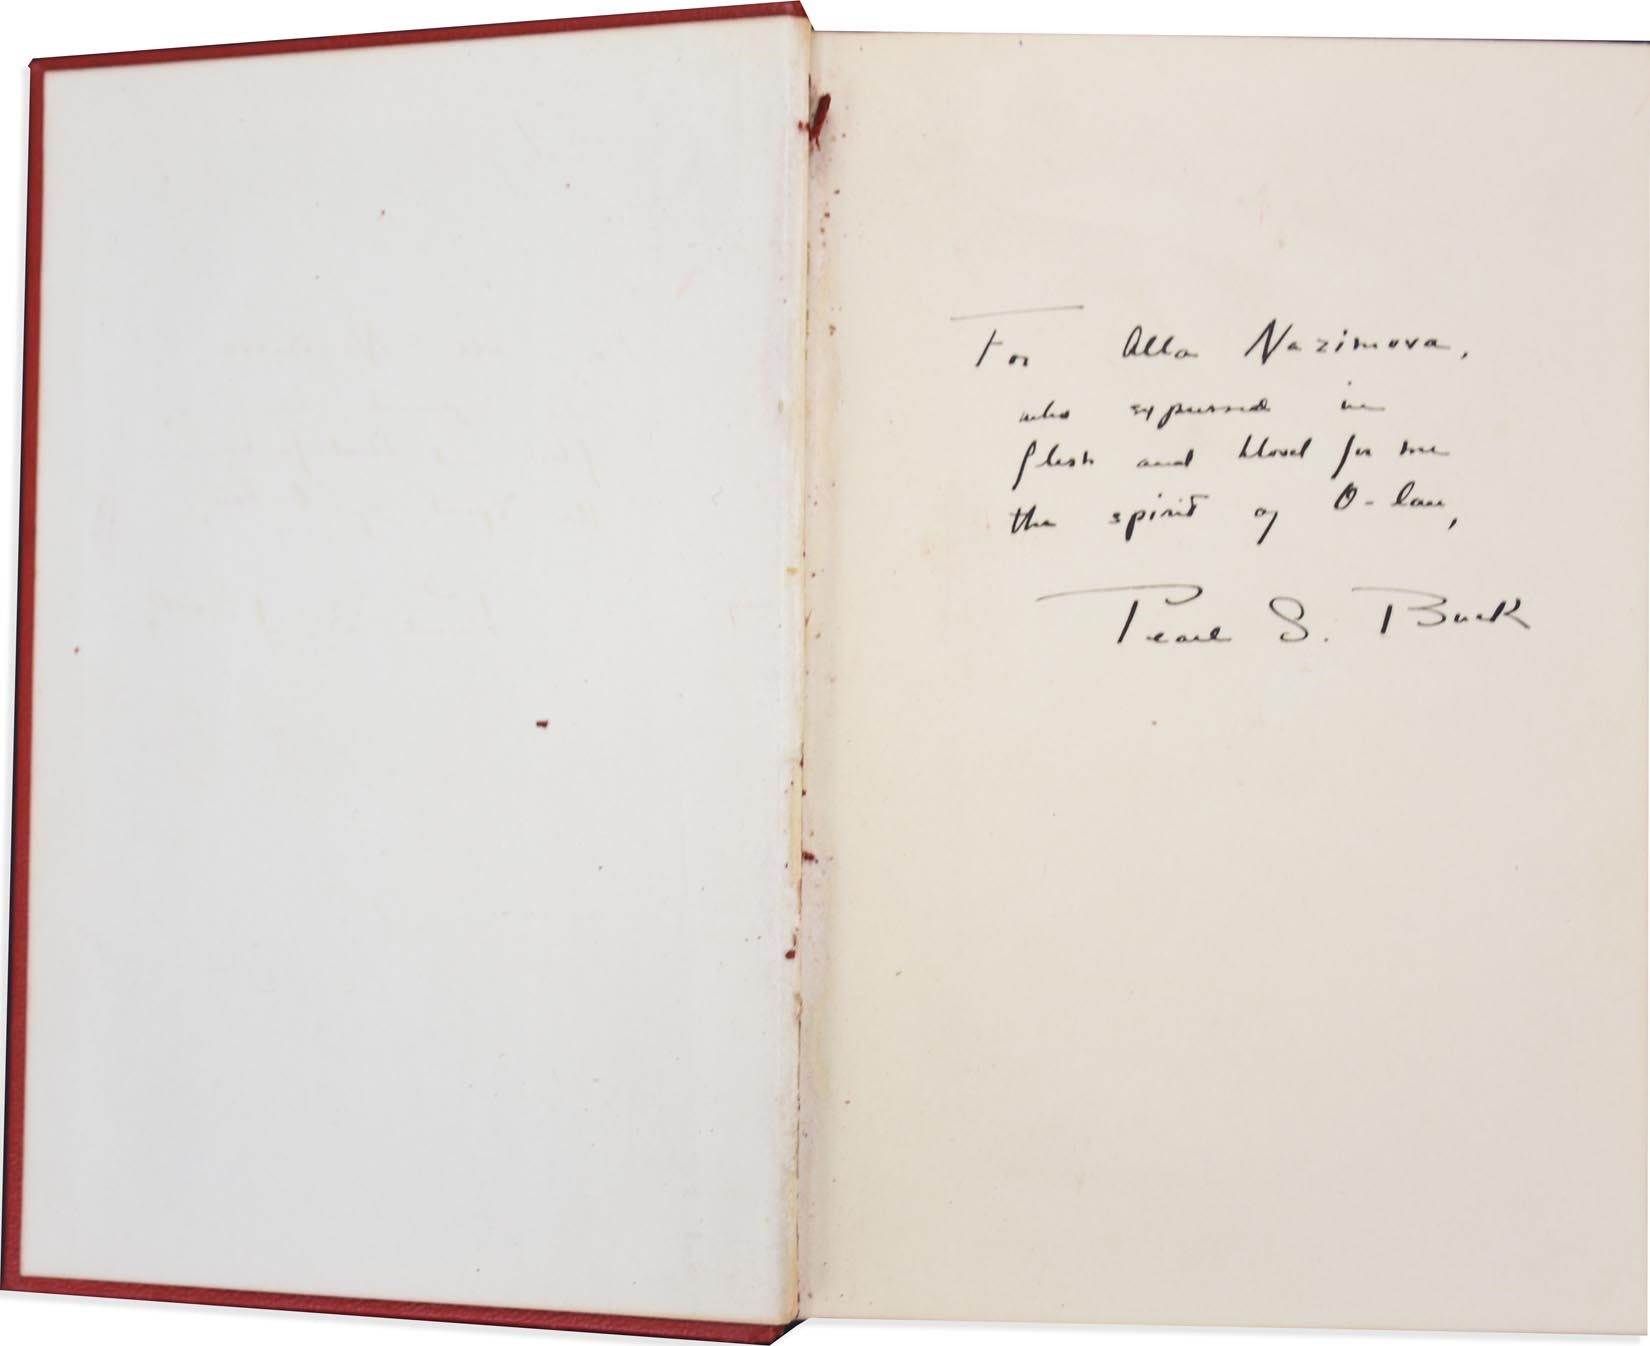 - 1932 "The Good Earth" Transcribed by Pearl S. Buck to Alla Nazimova